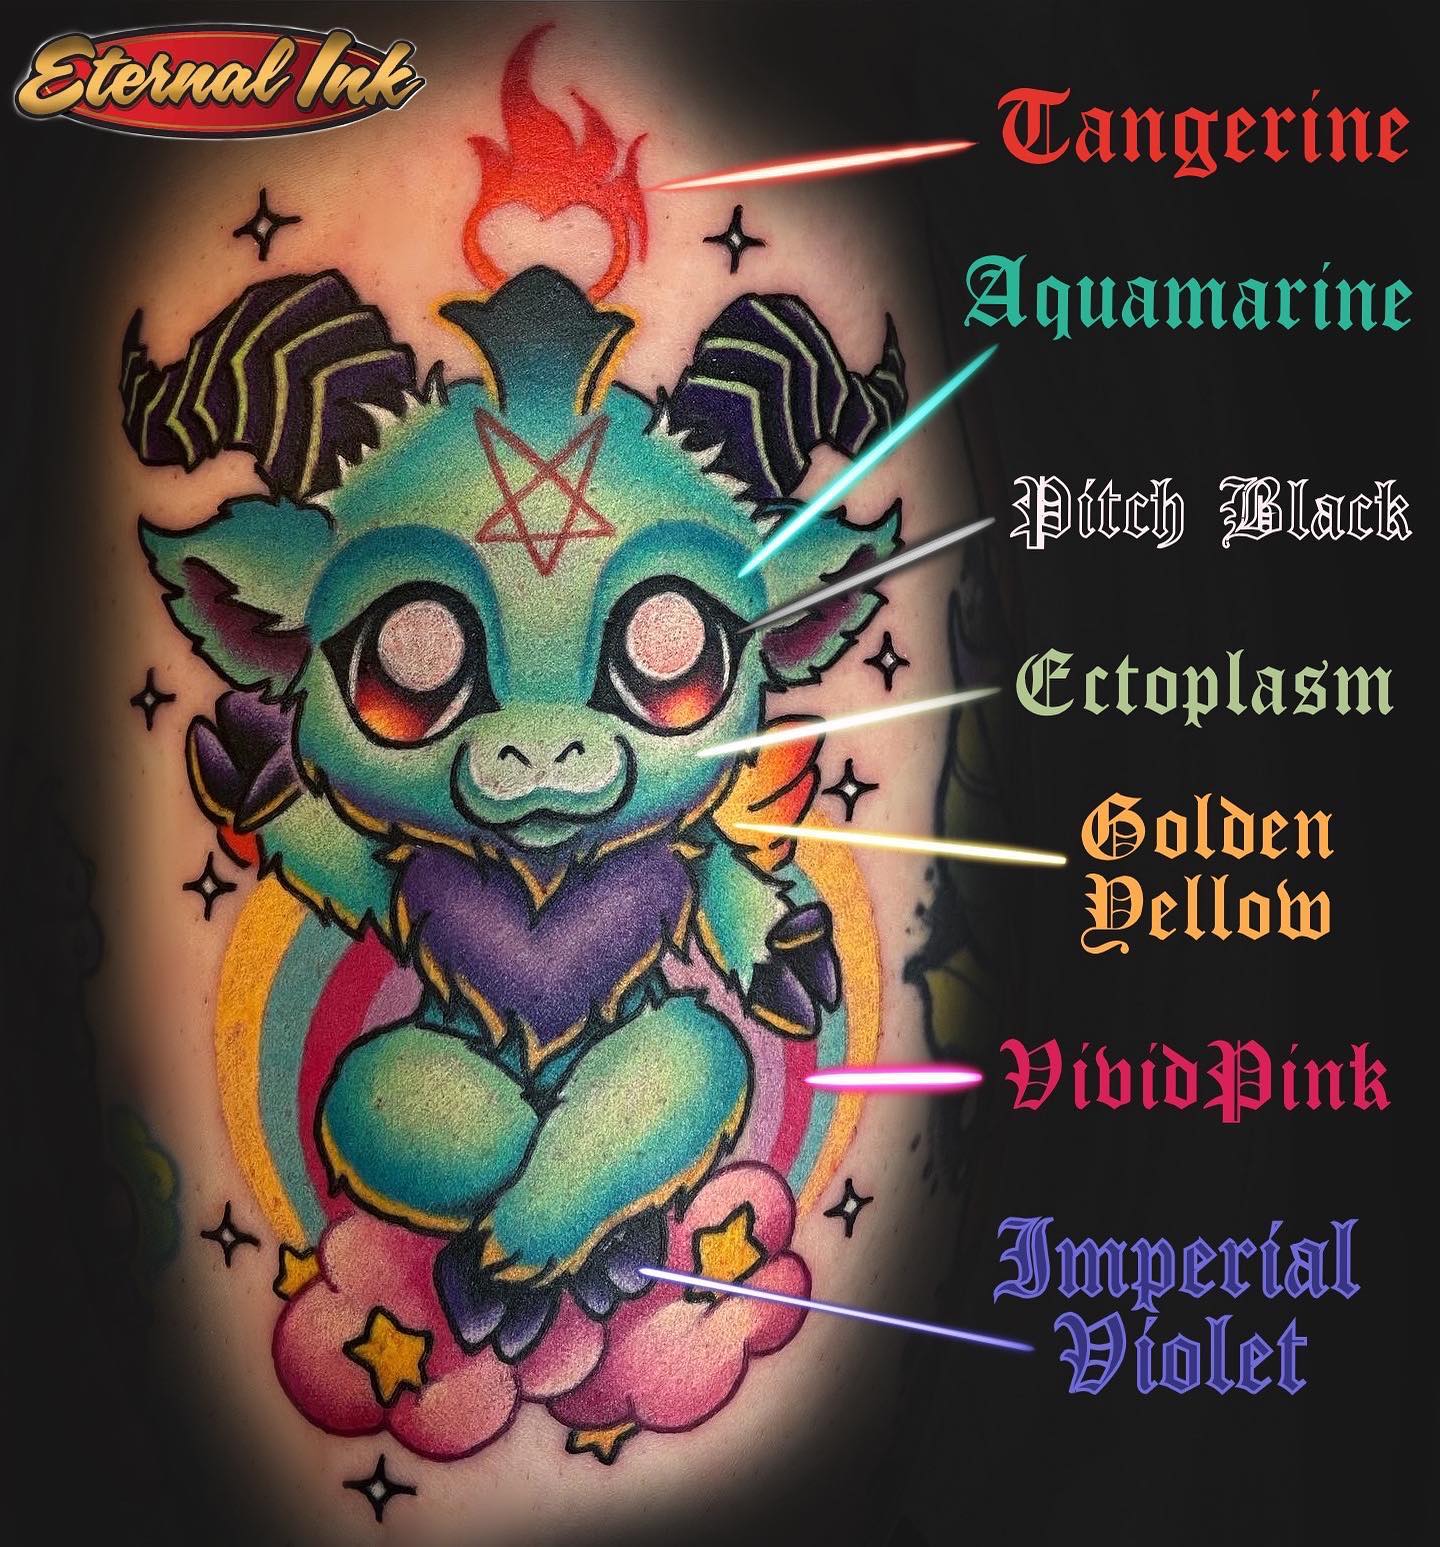 Eternal Ink - Liz Cook - Imperial Violet - Ultimate Tattoo Supply